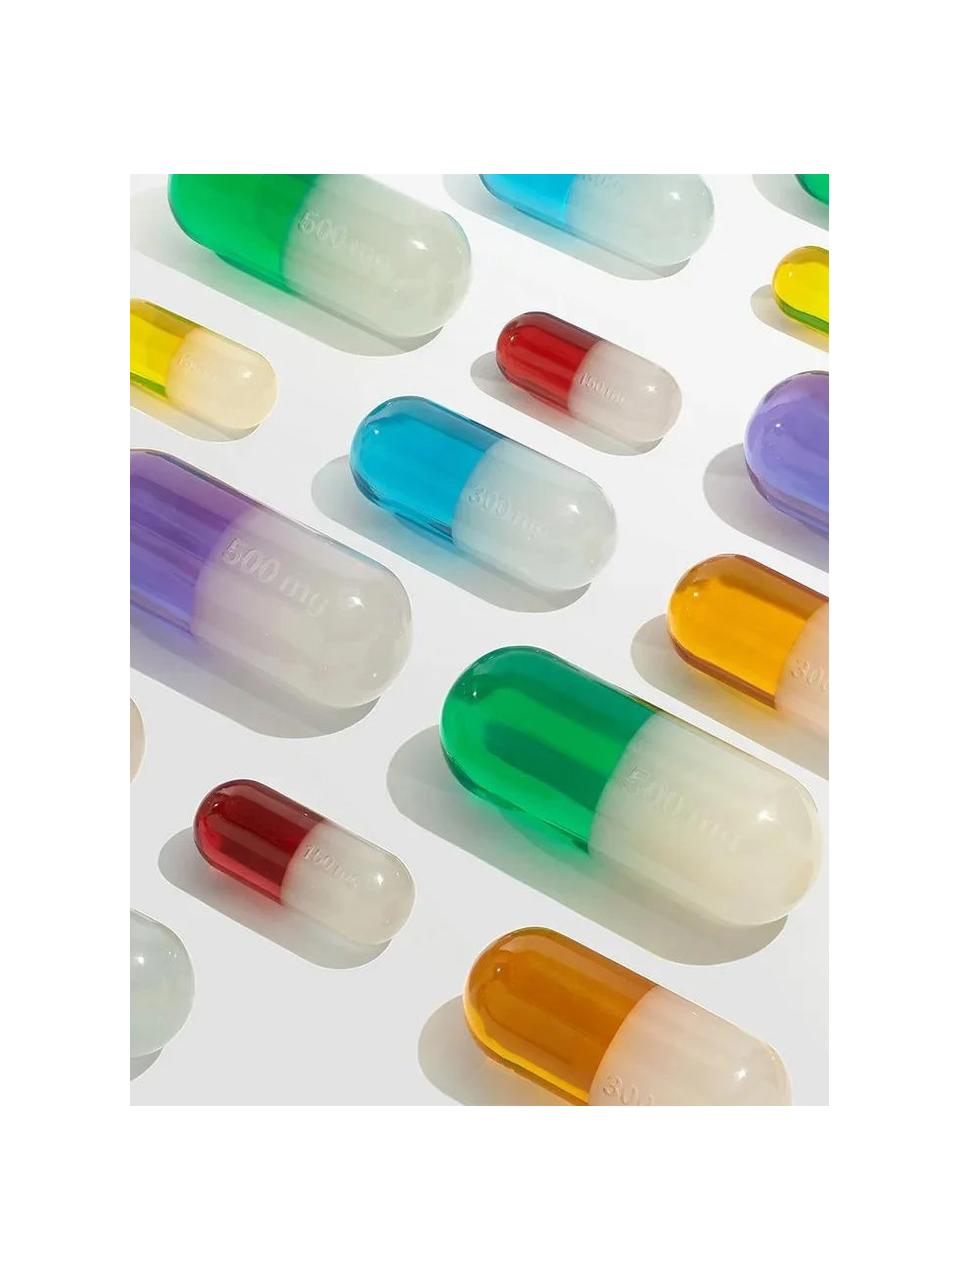 Deko-Objekt Pill, Polyacryl, poliert, Weiß, Türkis, B 24 x H 9 cm